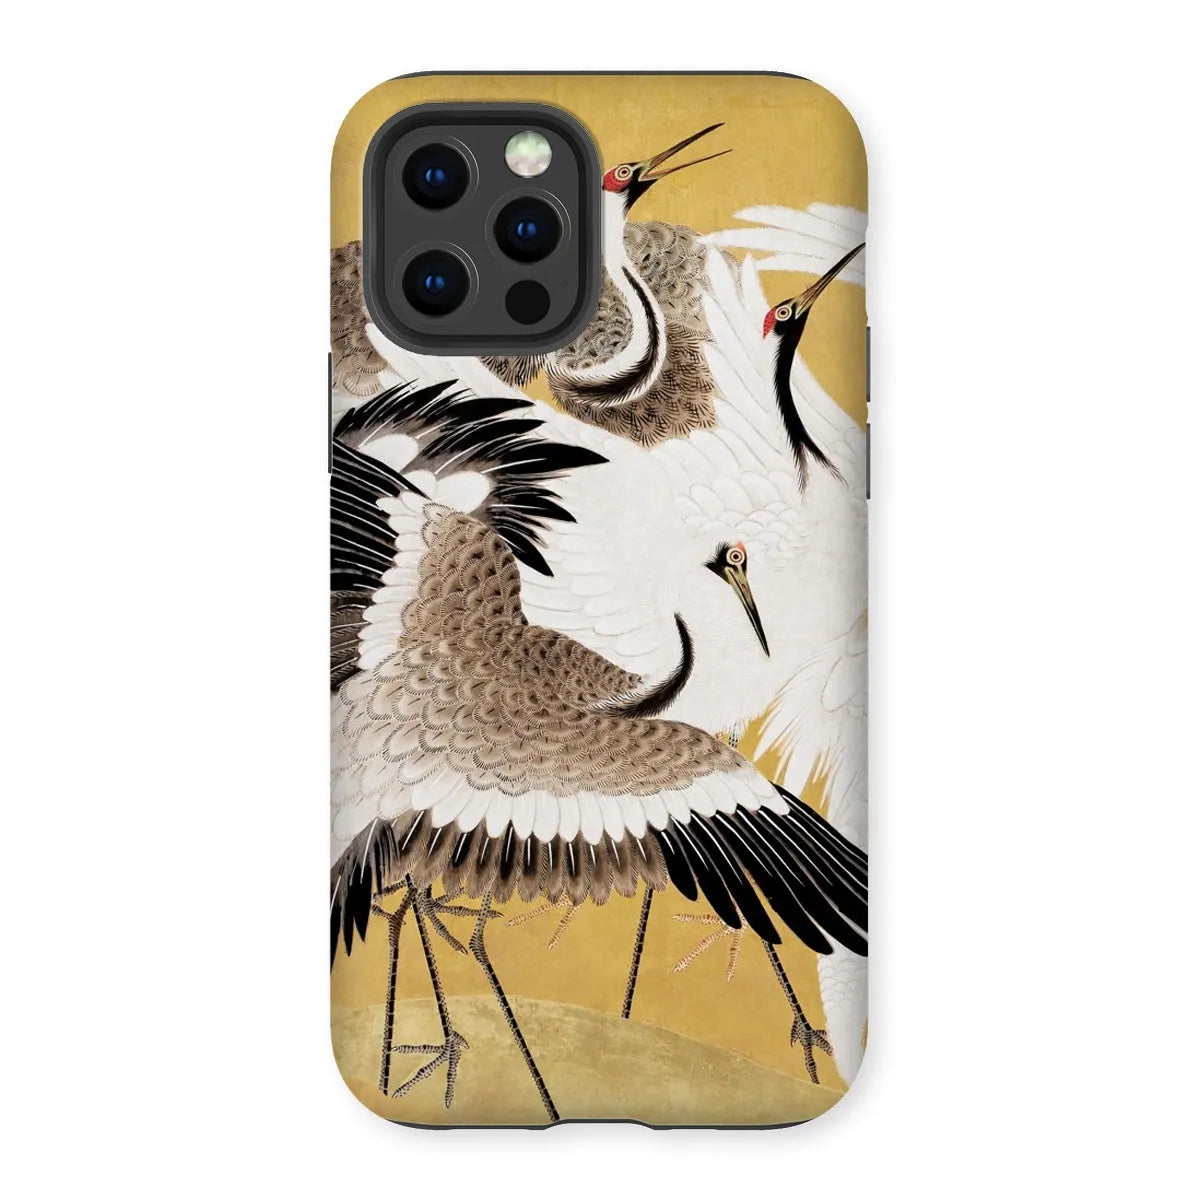 Flock Of Cranes Japanese Bird Art Phone Case - Ishida Yūtei - Iphone 12 Pro / Matte - Mobile Phone Cases - Aesthetic